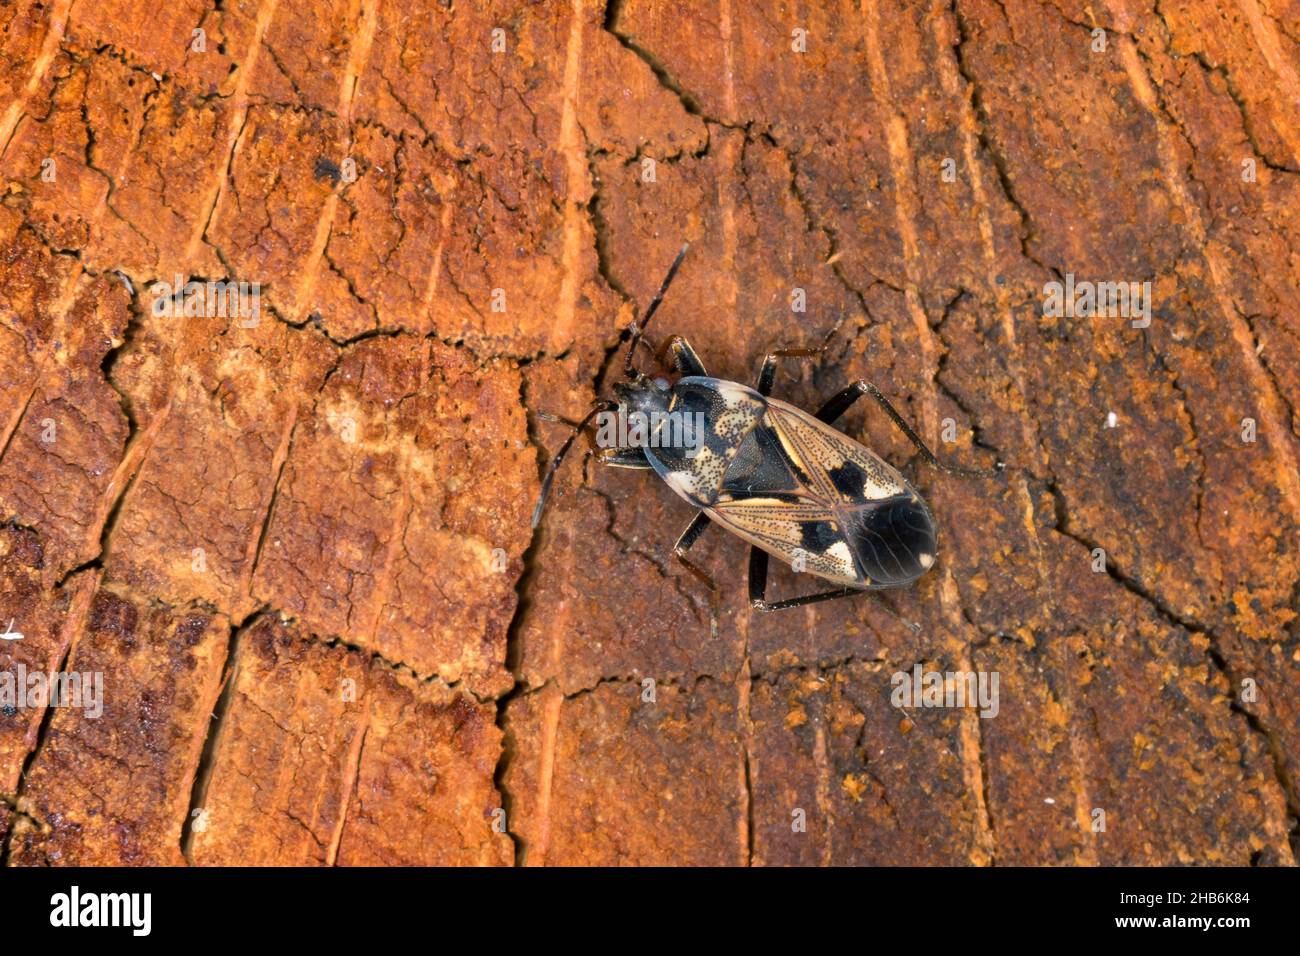 Chinche de maleza, insecto de semilla (Rhyparochromus vulgaris), en madera muerta, vista dorsal, Alemania Foto de stock